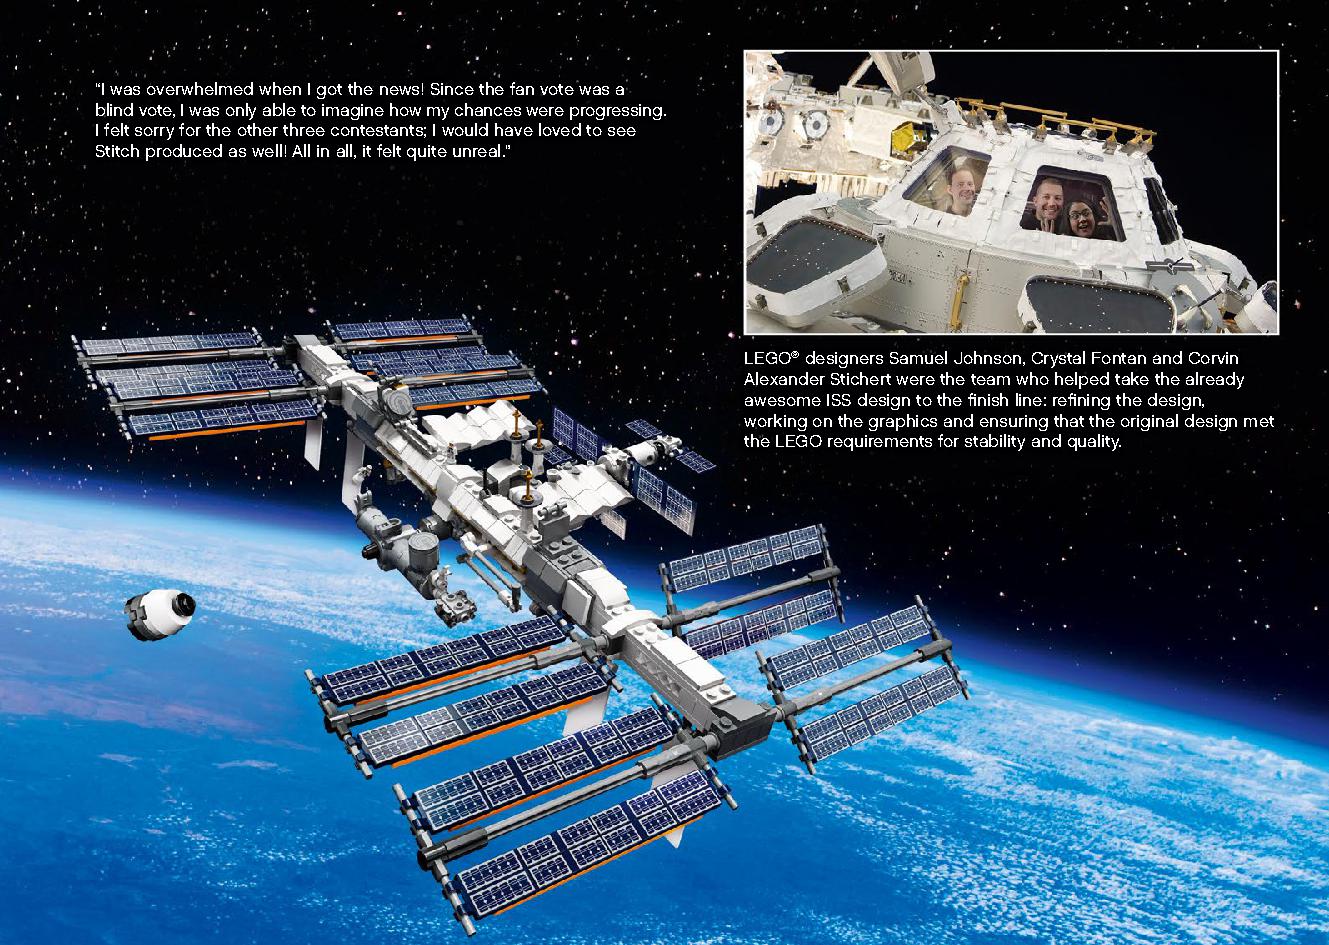 International Space Station 21321 レゴの商品情報 レゴの説明書・組立方法 7 page